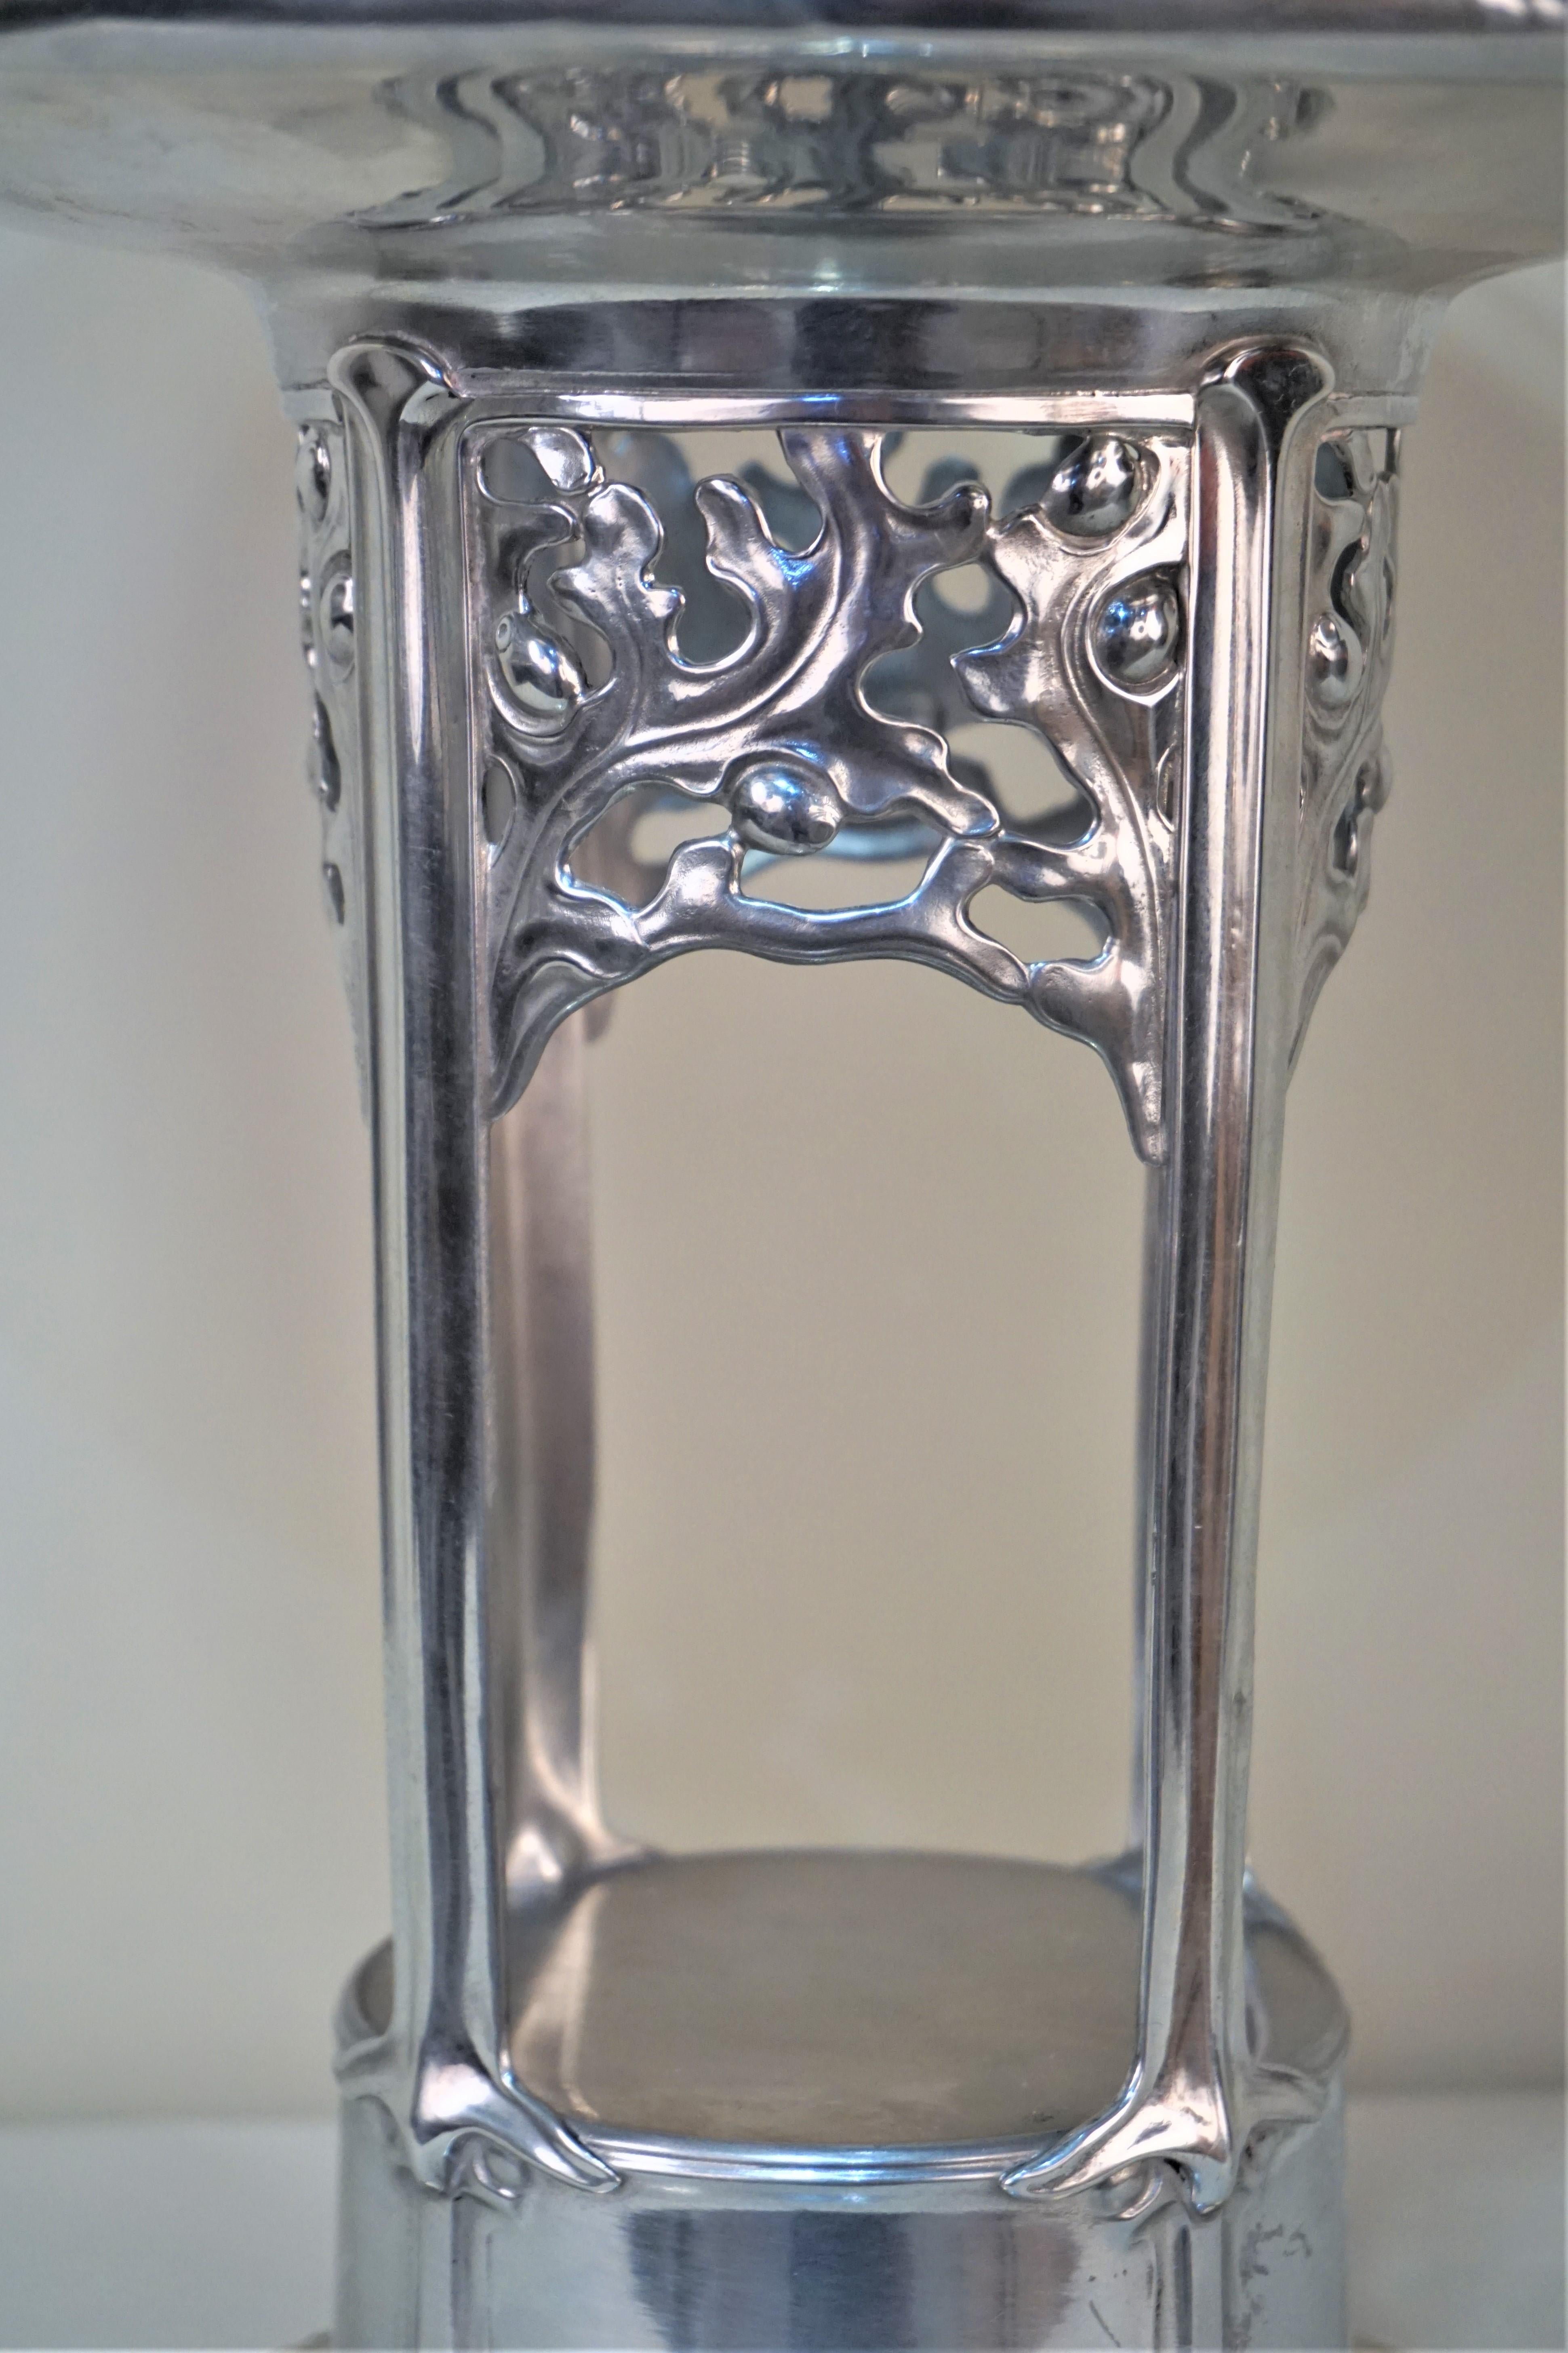 Sami polish pewter raised pattern art nouveau center piece with cut glass center liner.